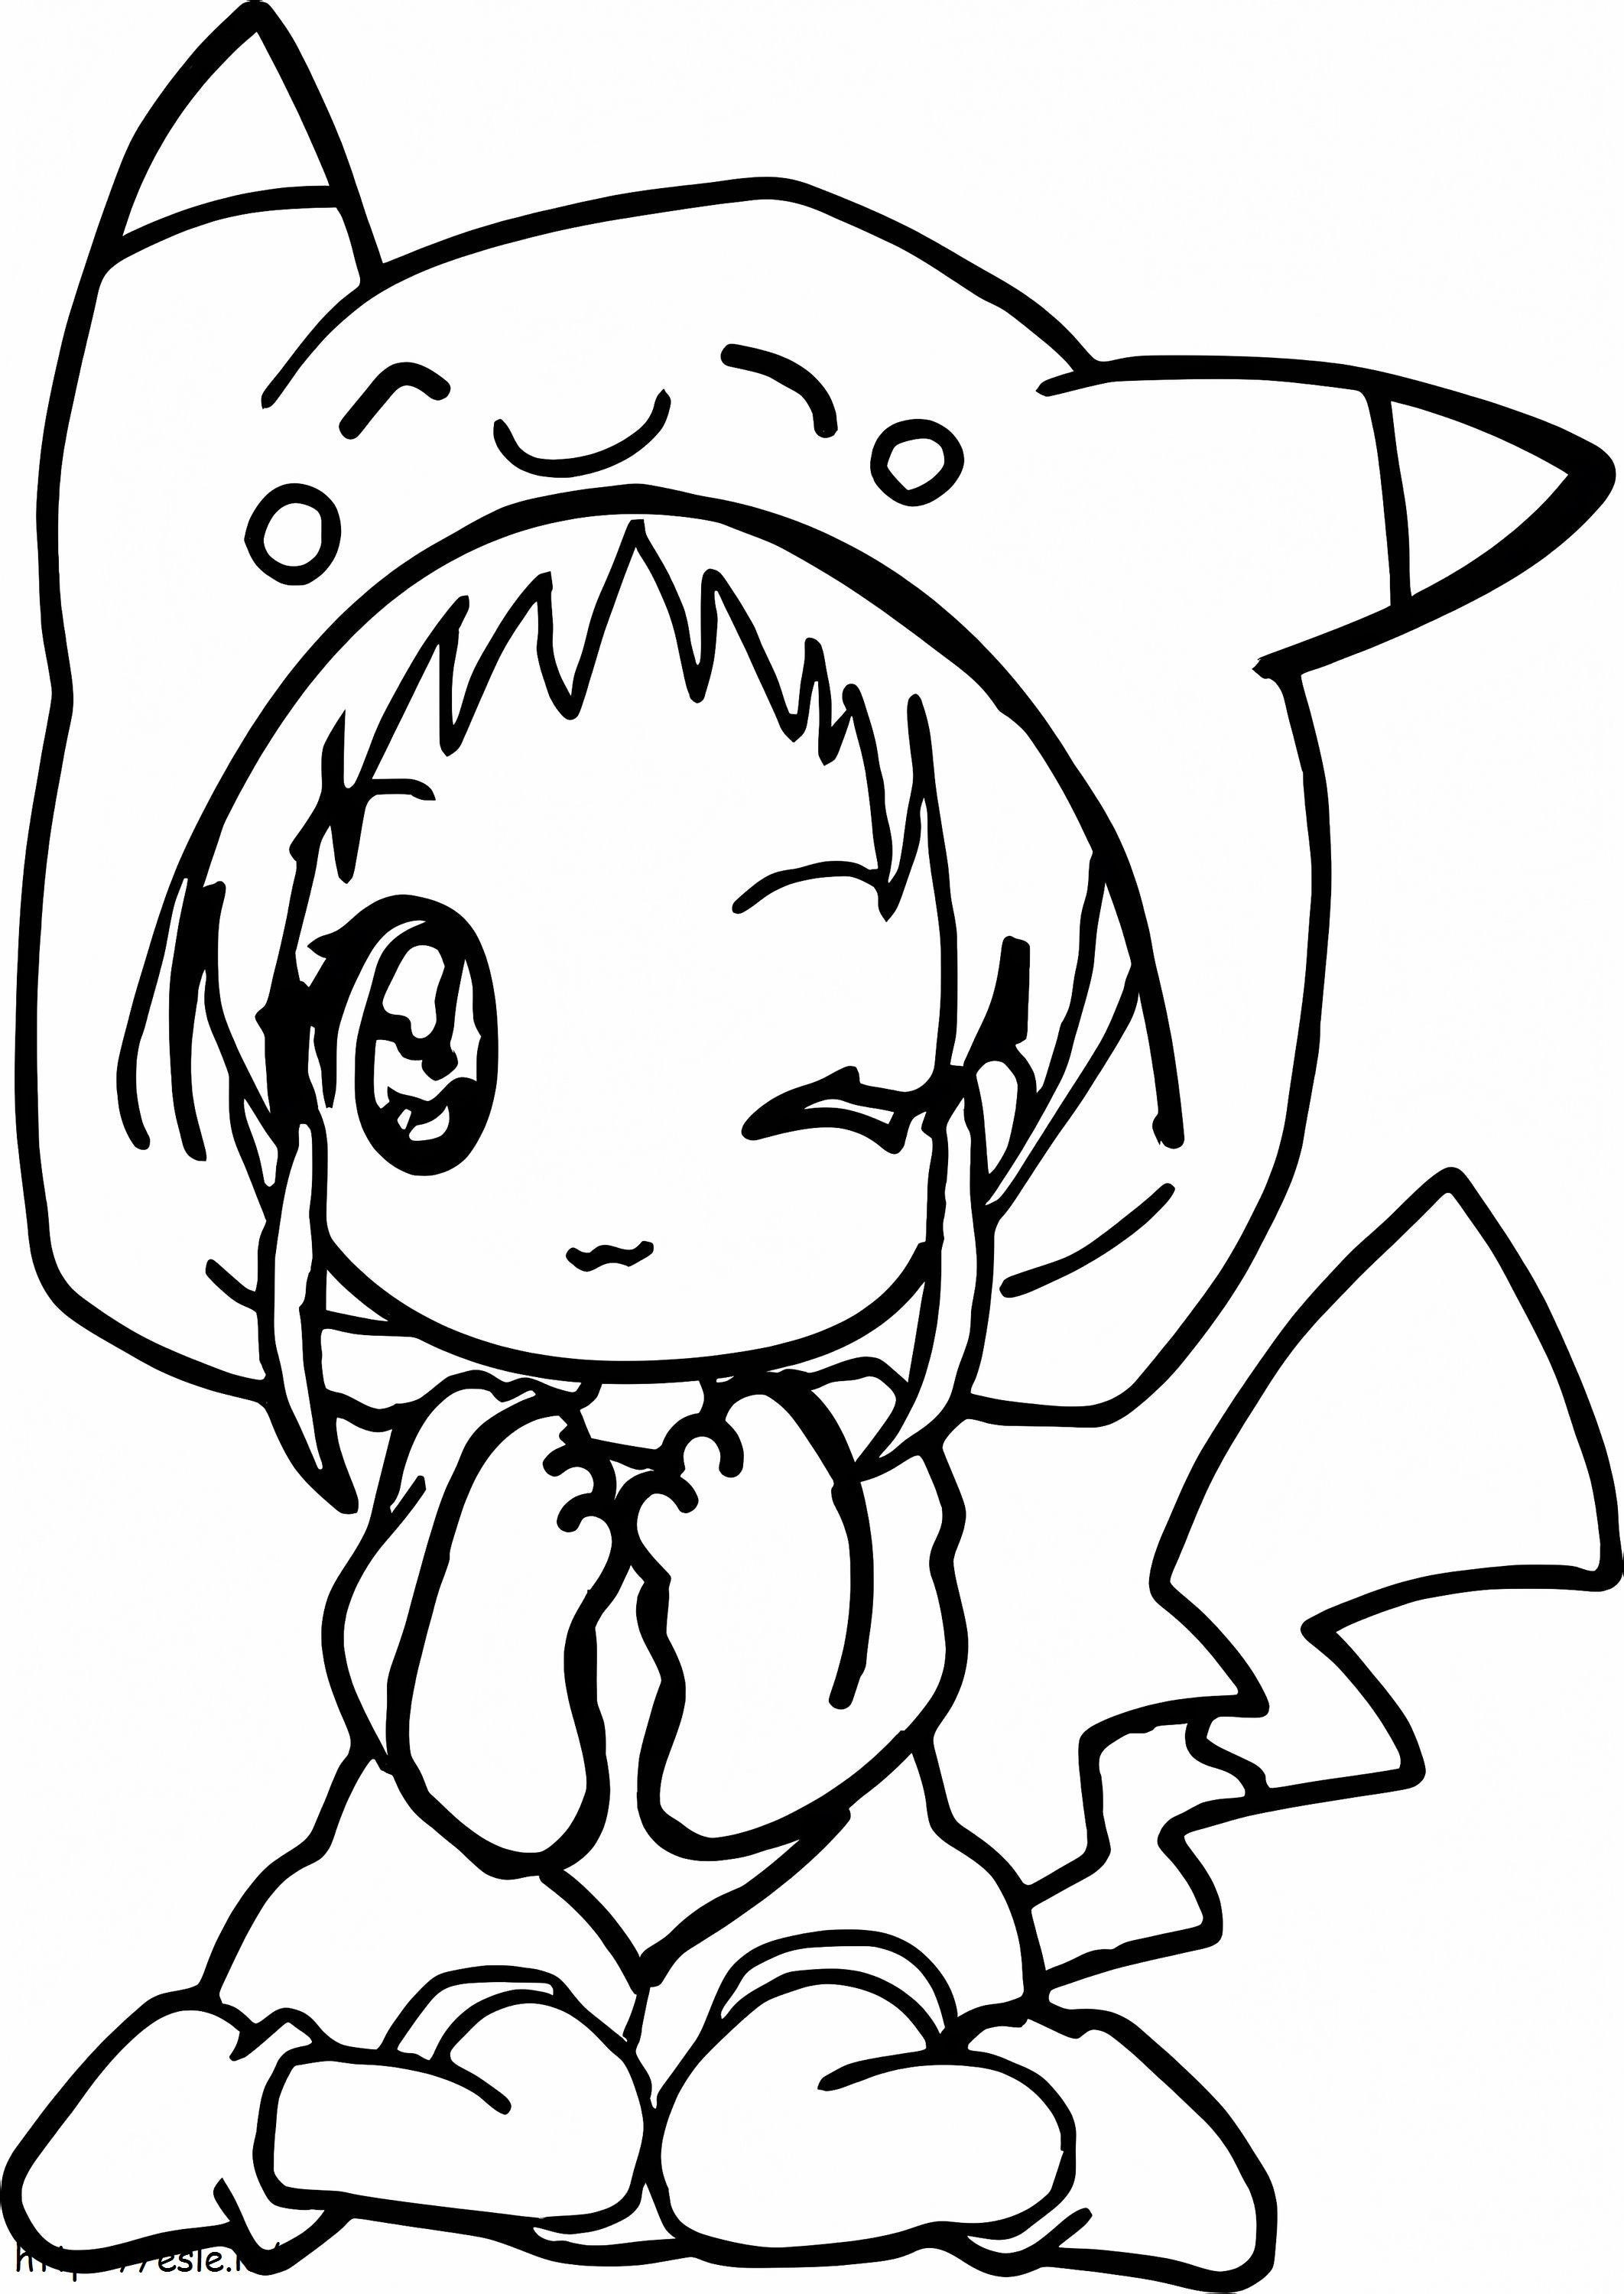 Chica Pikachu Kawaii coloring page